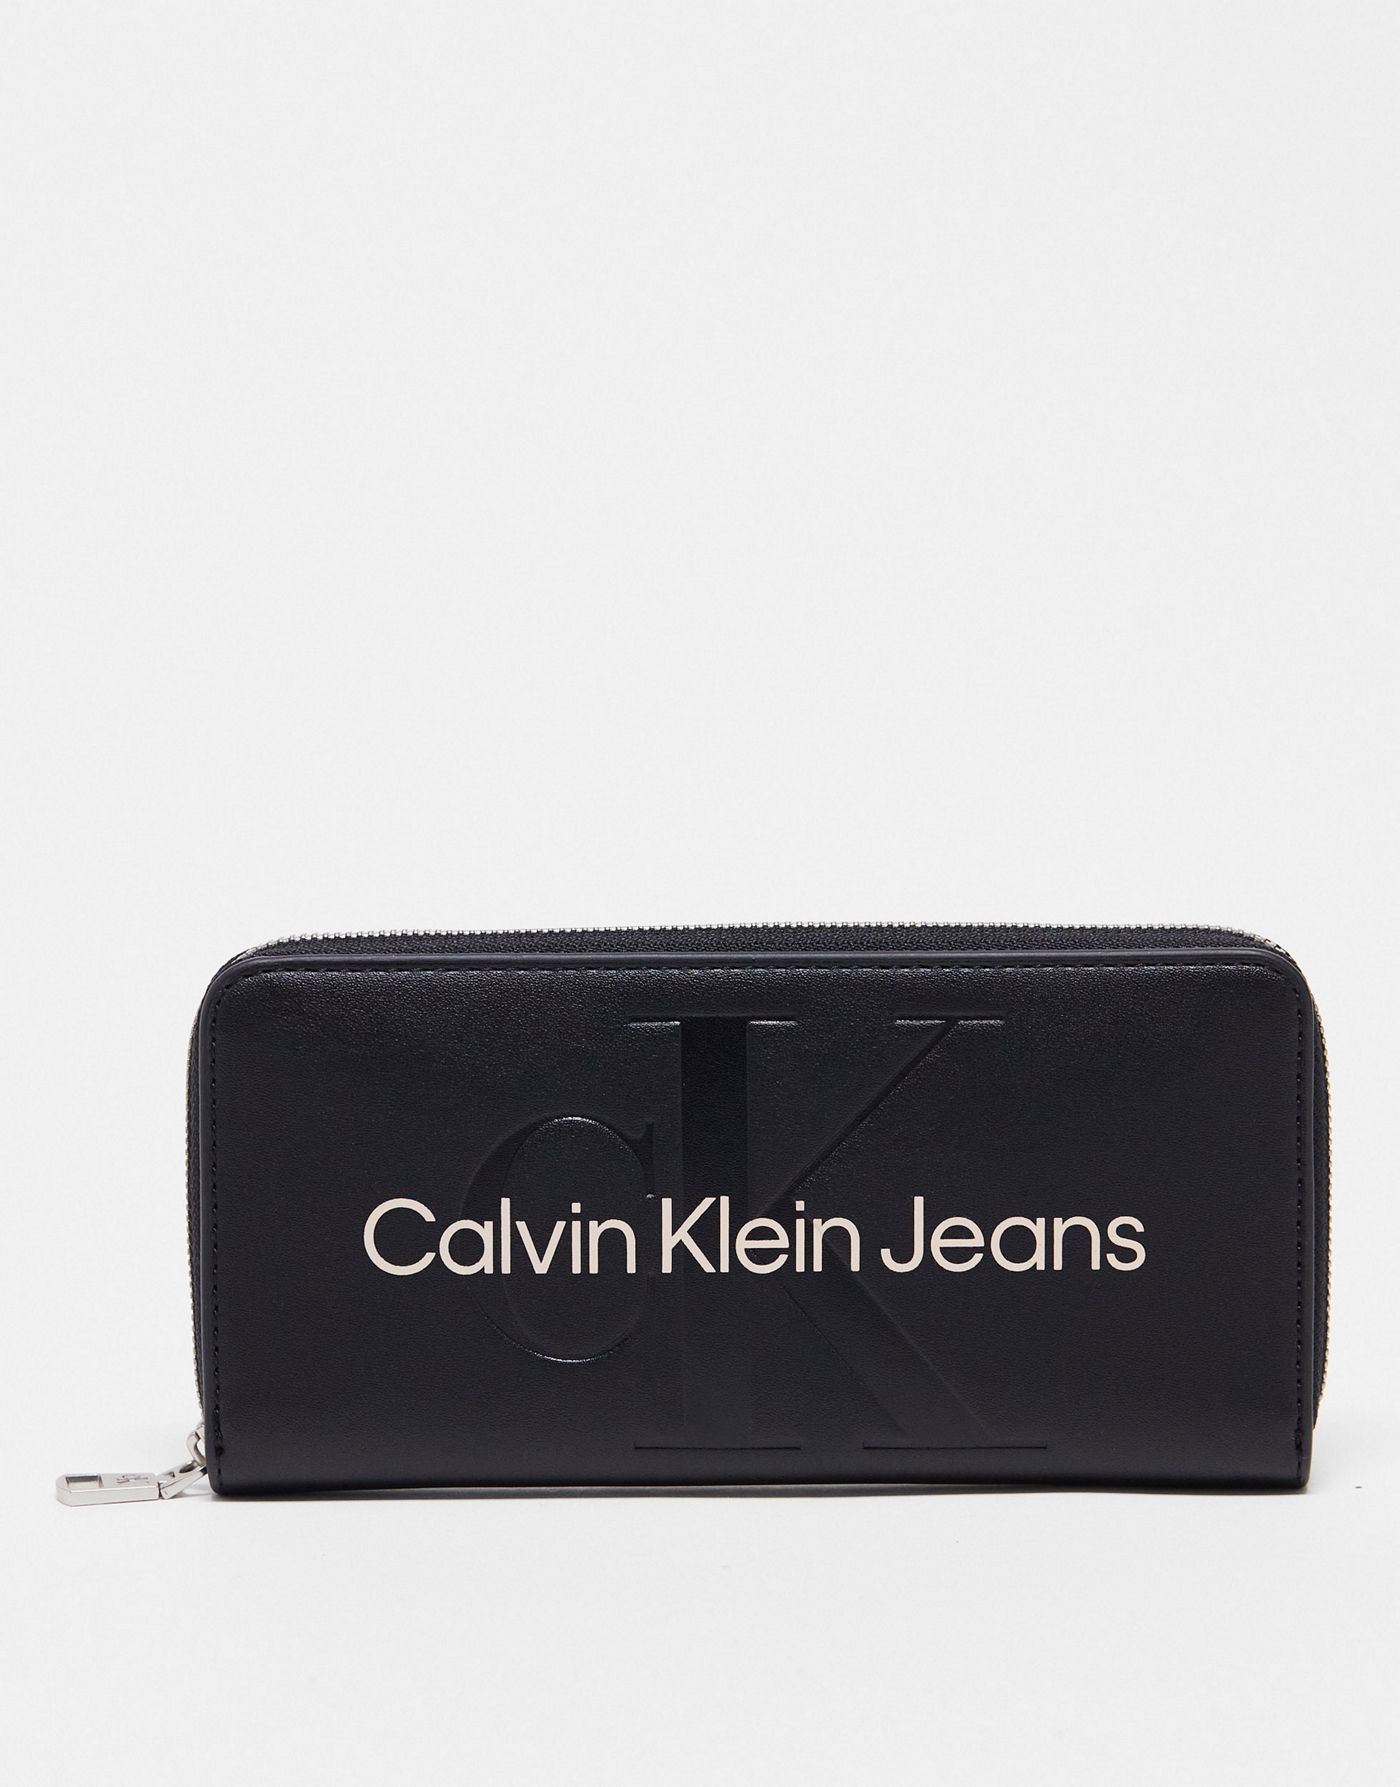 CK Jeans sculpted zip around mono wallet in black